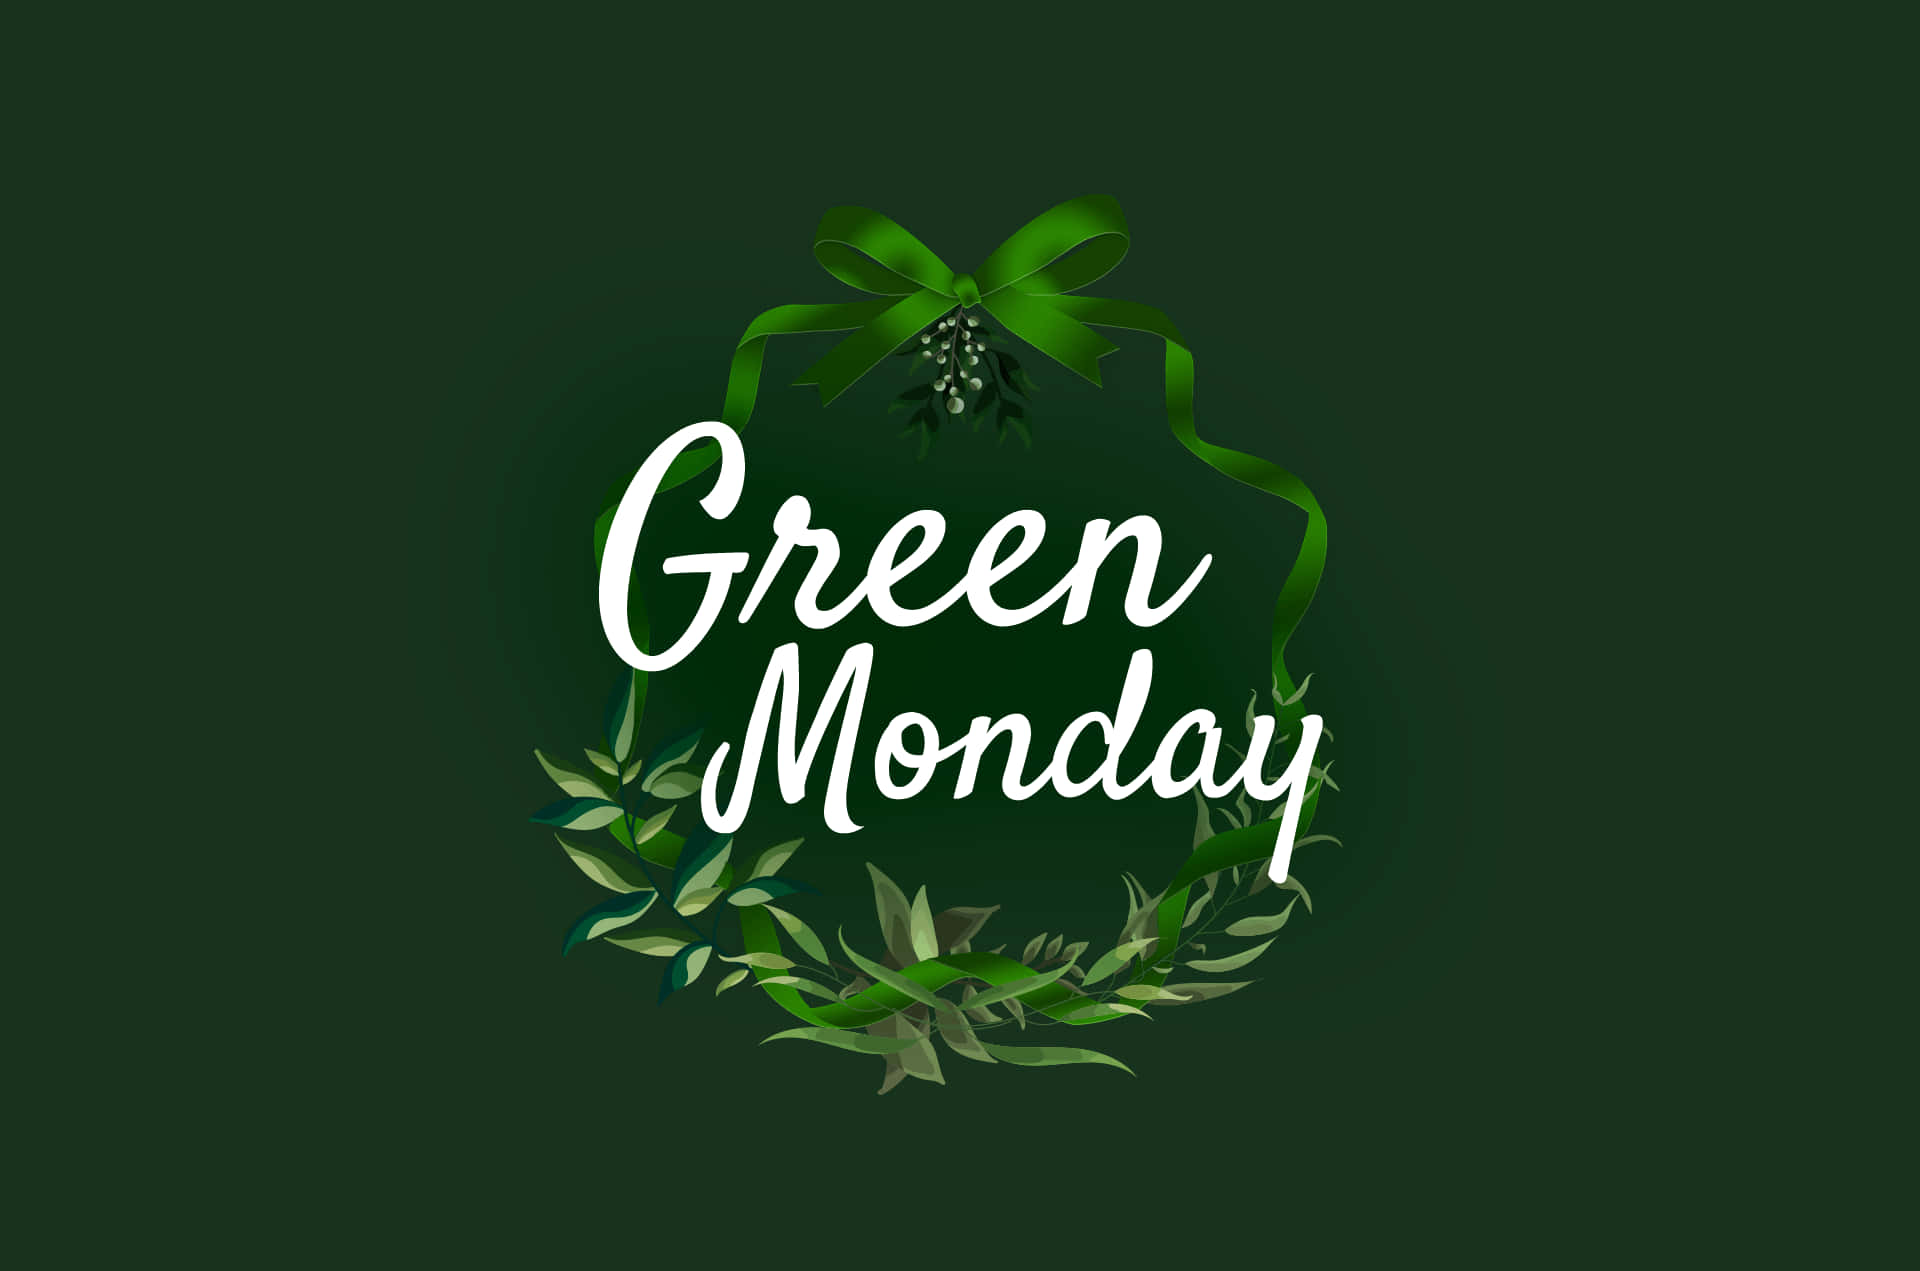 Green Monday Leaf Wreath Digital Art Picture